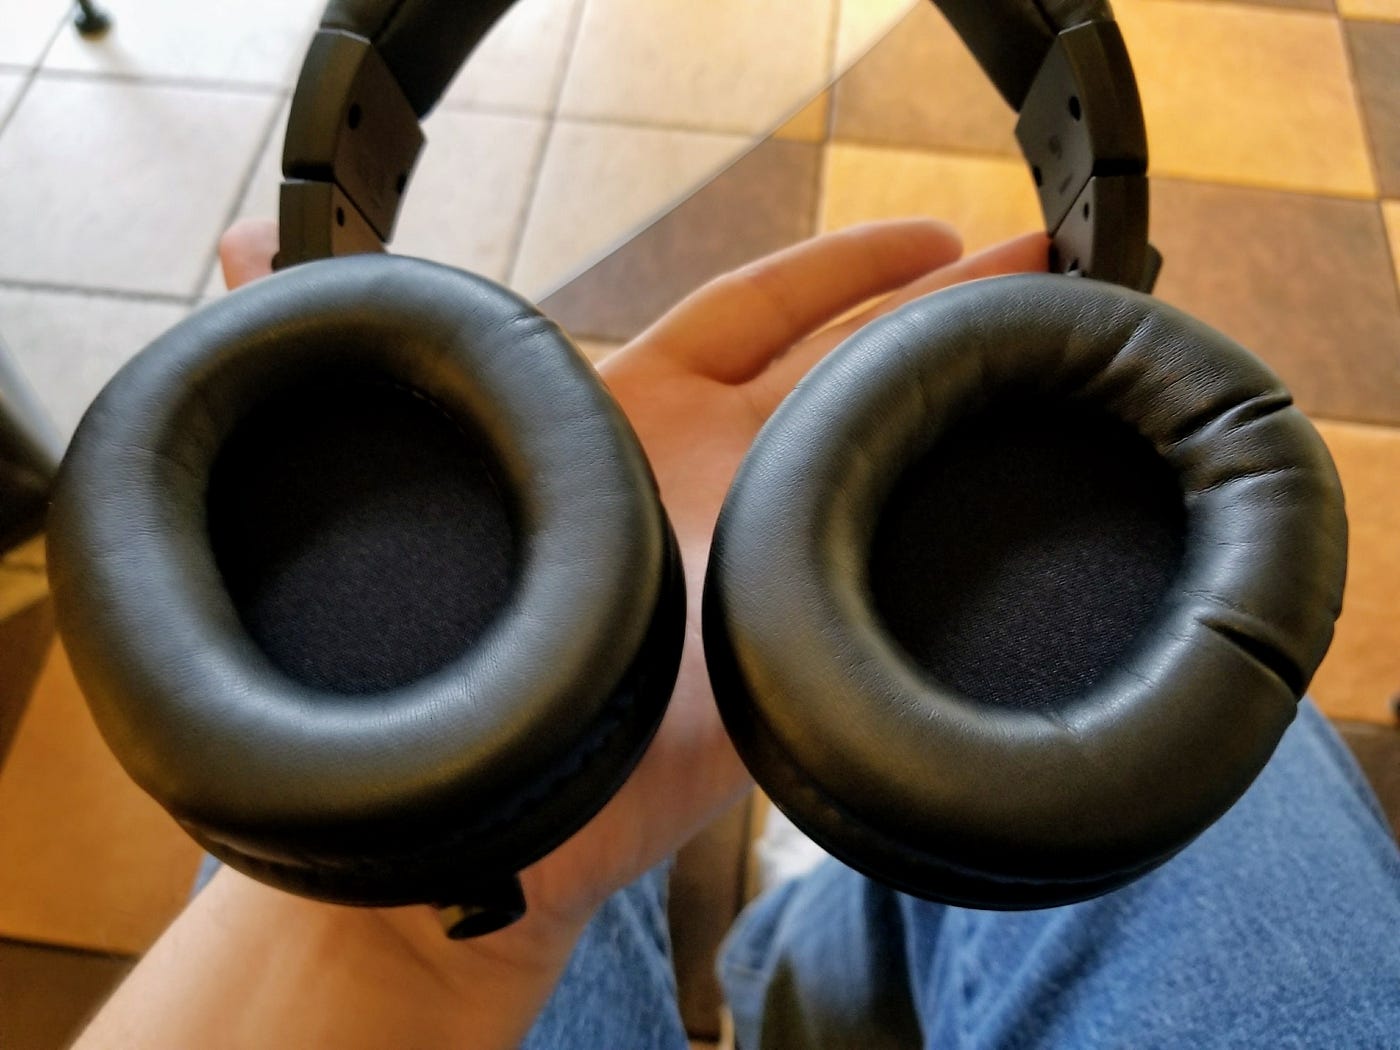 Audio-Technica M50X Headphones Review, by Alex Rowe